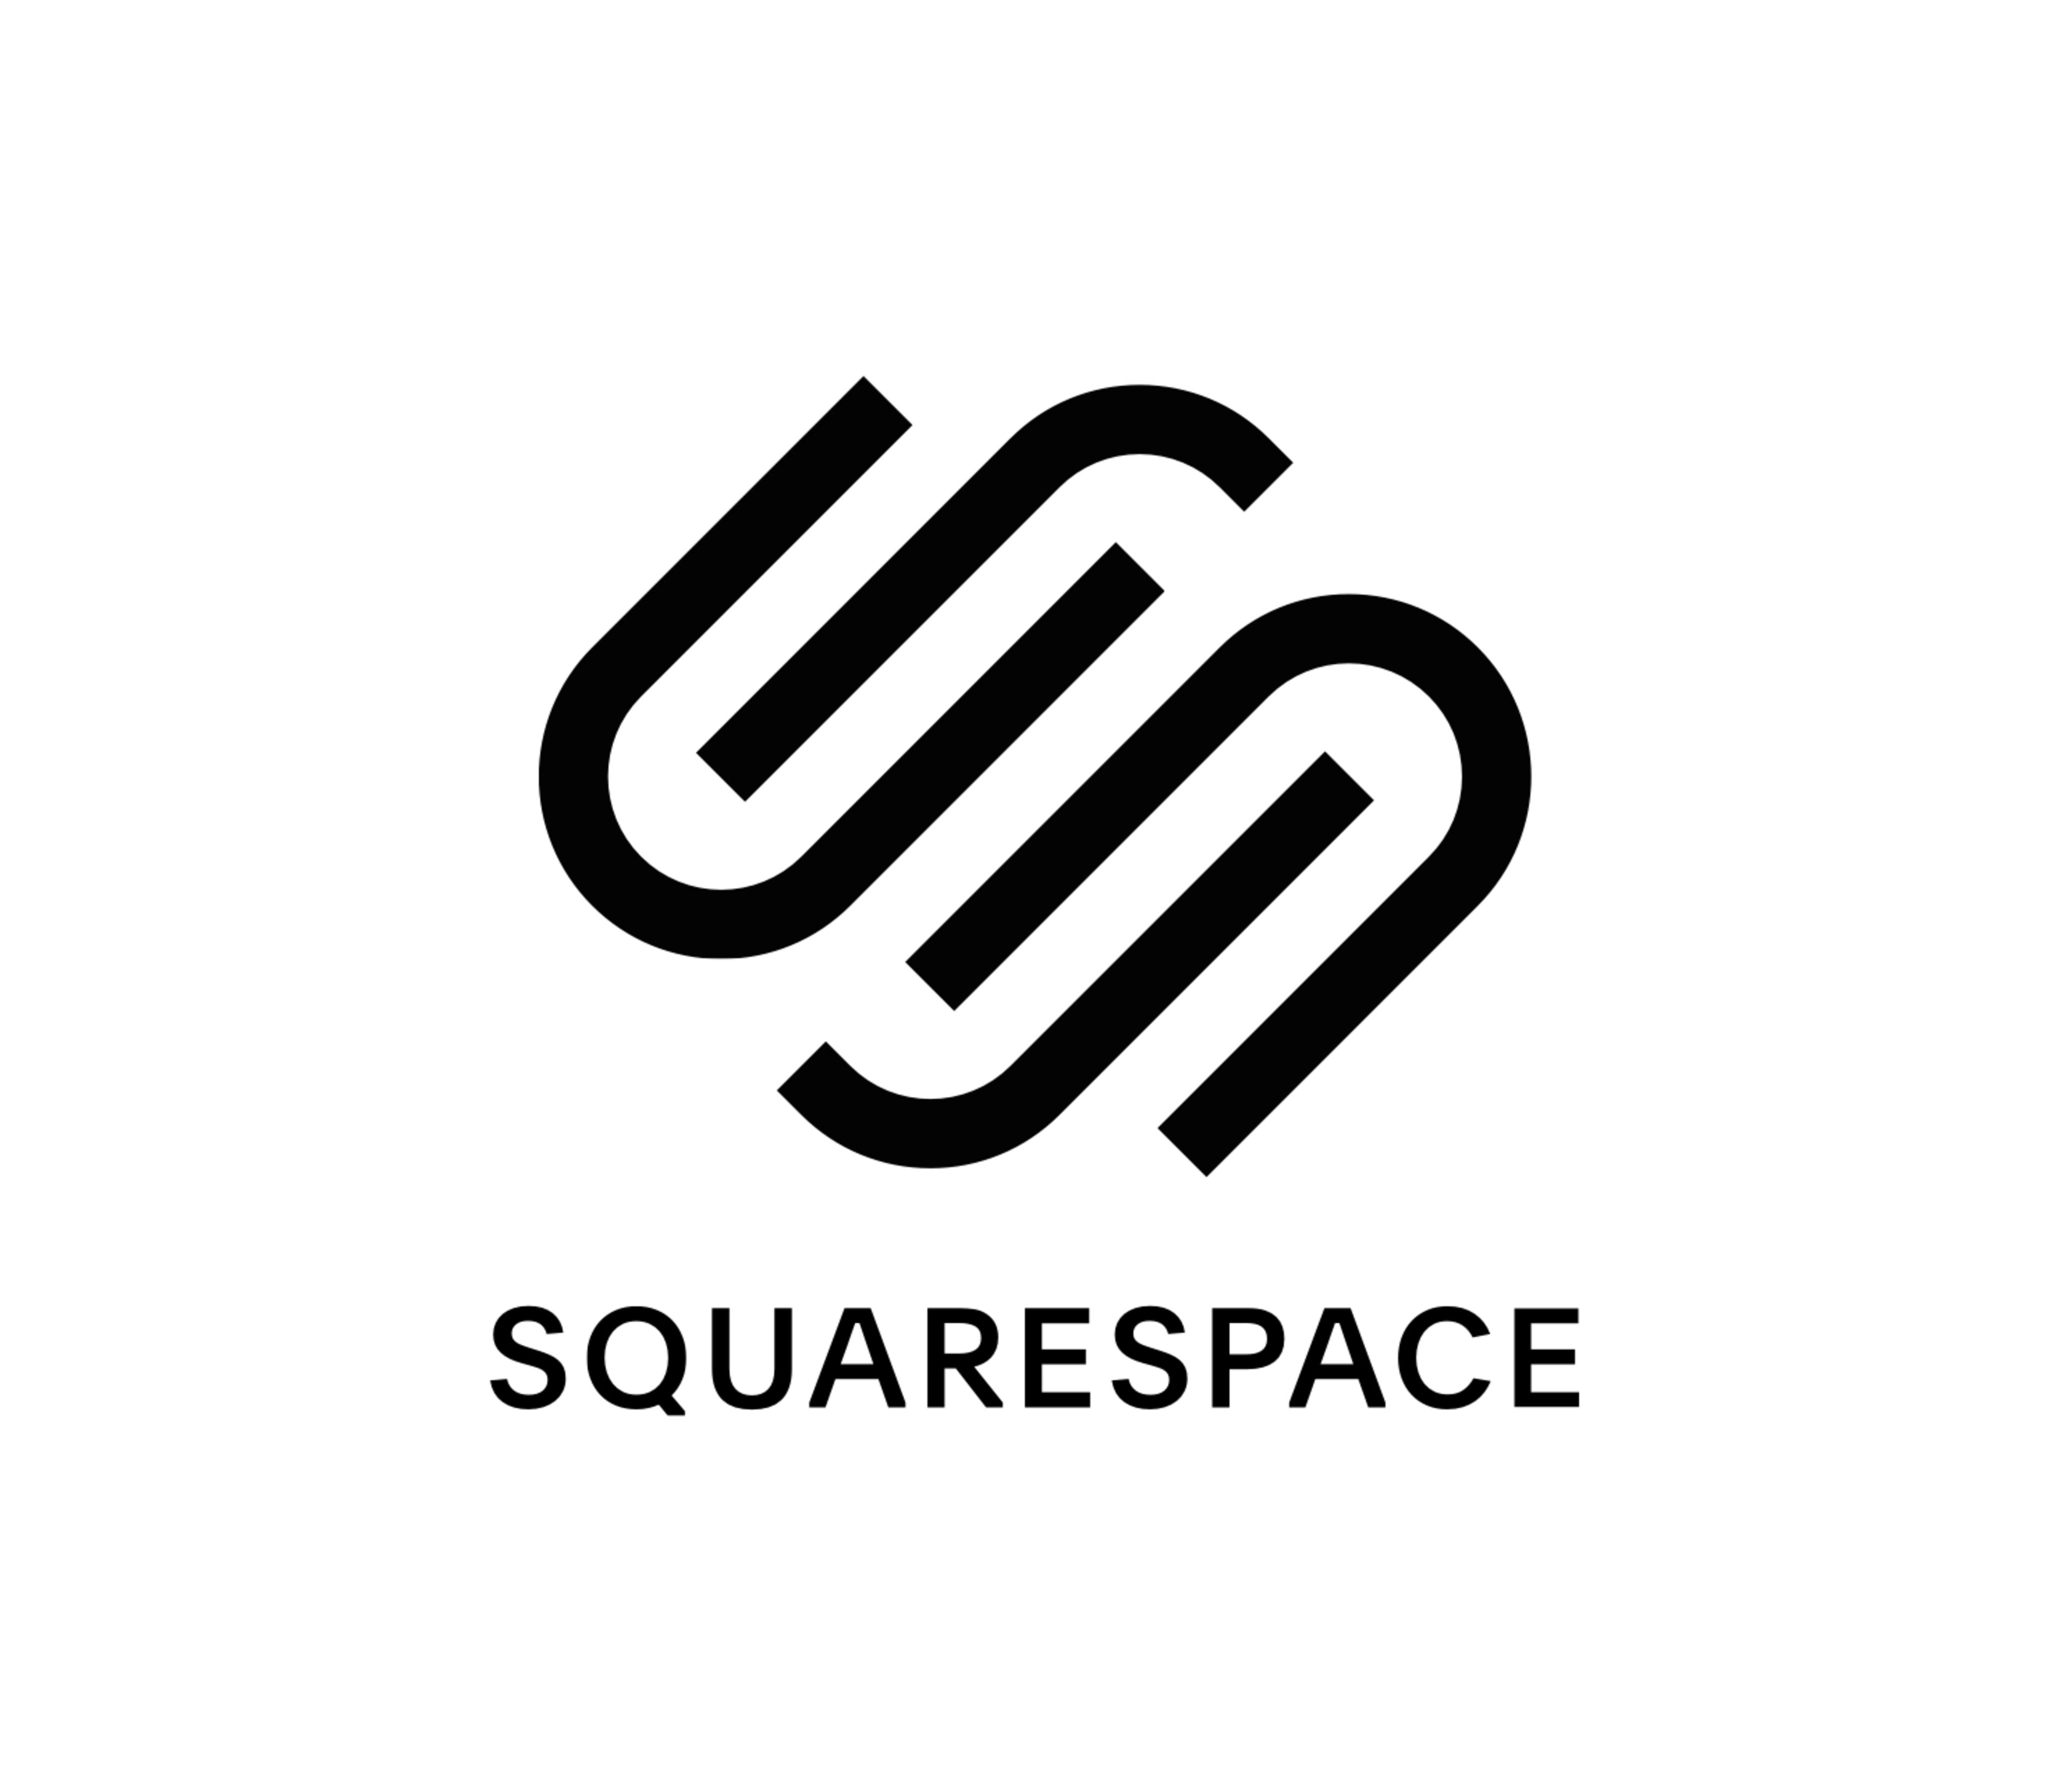 SquarespaceCode